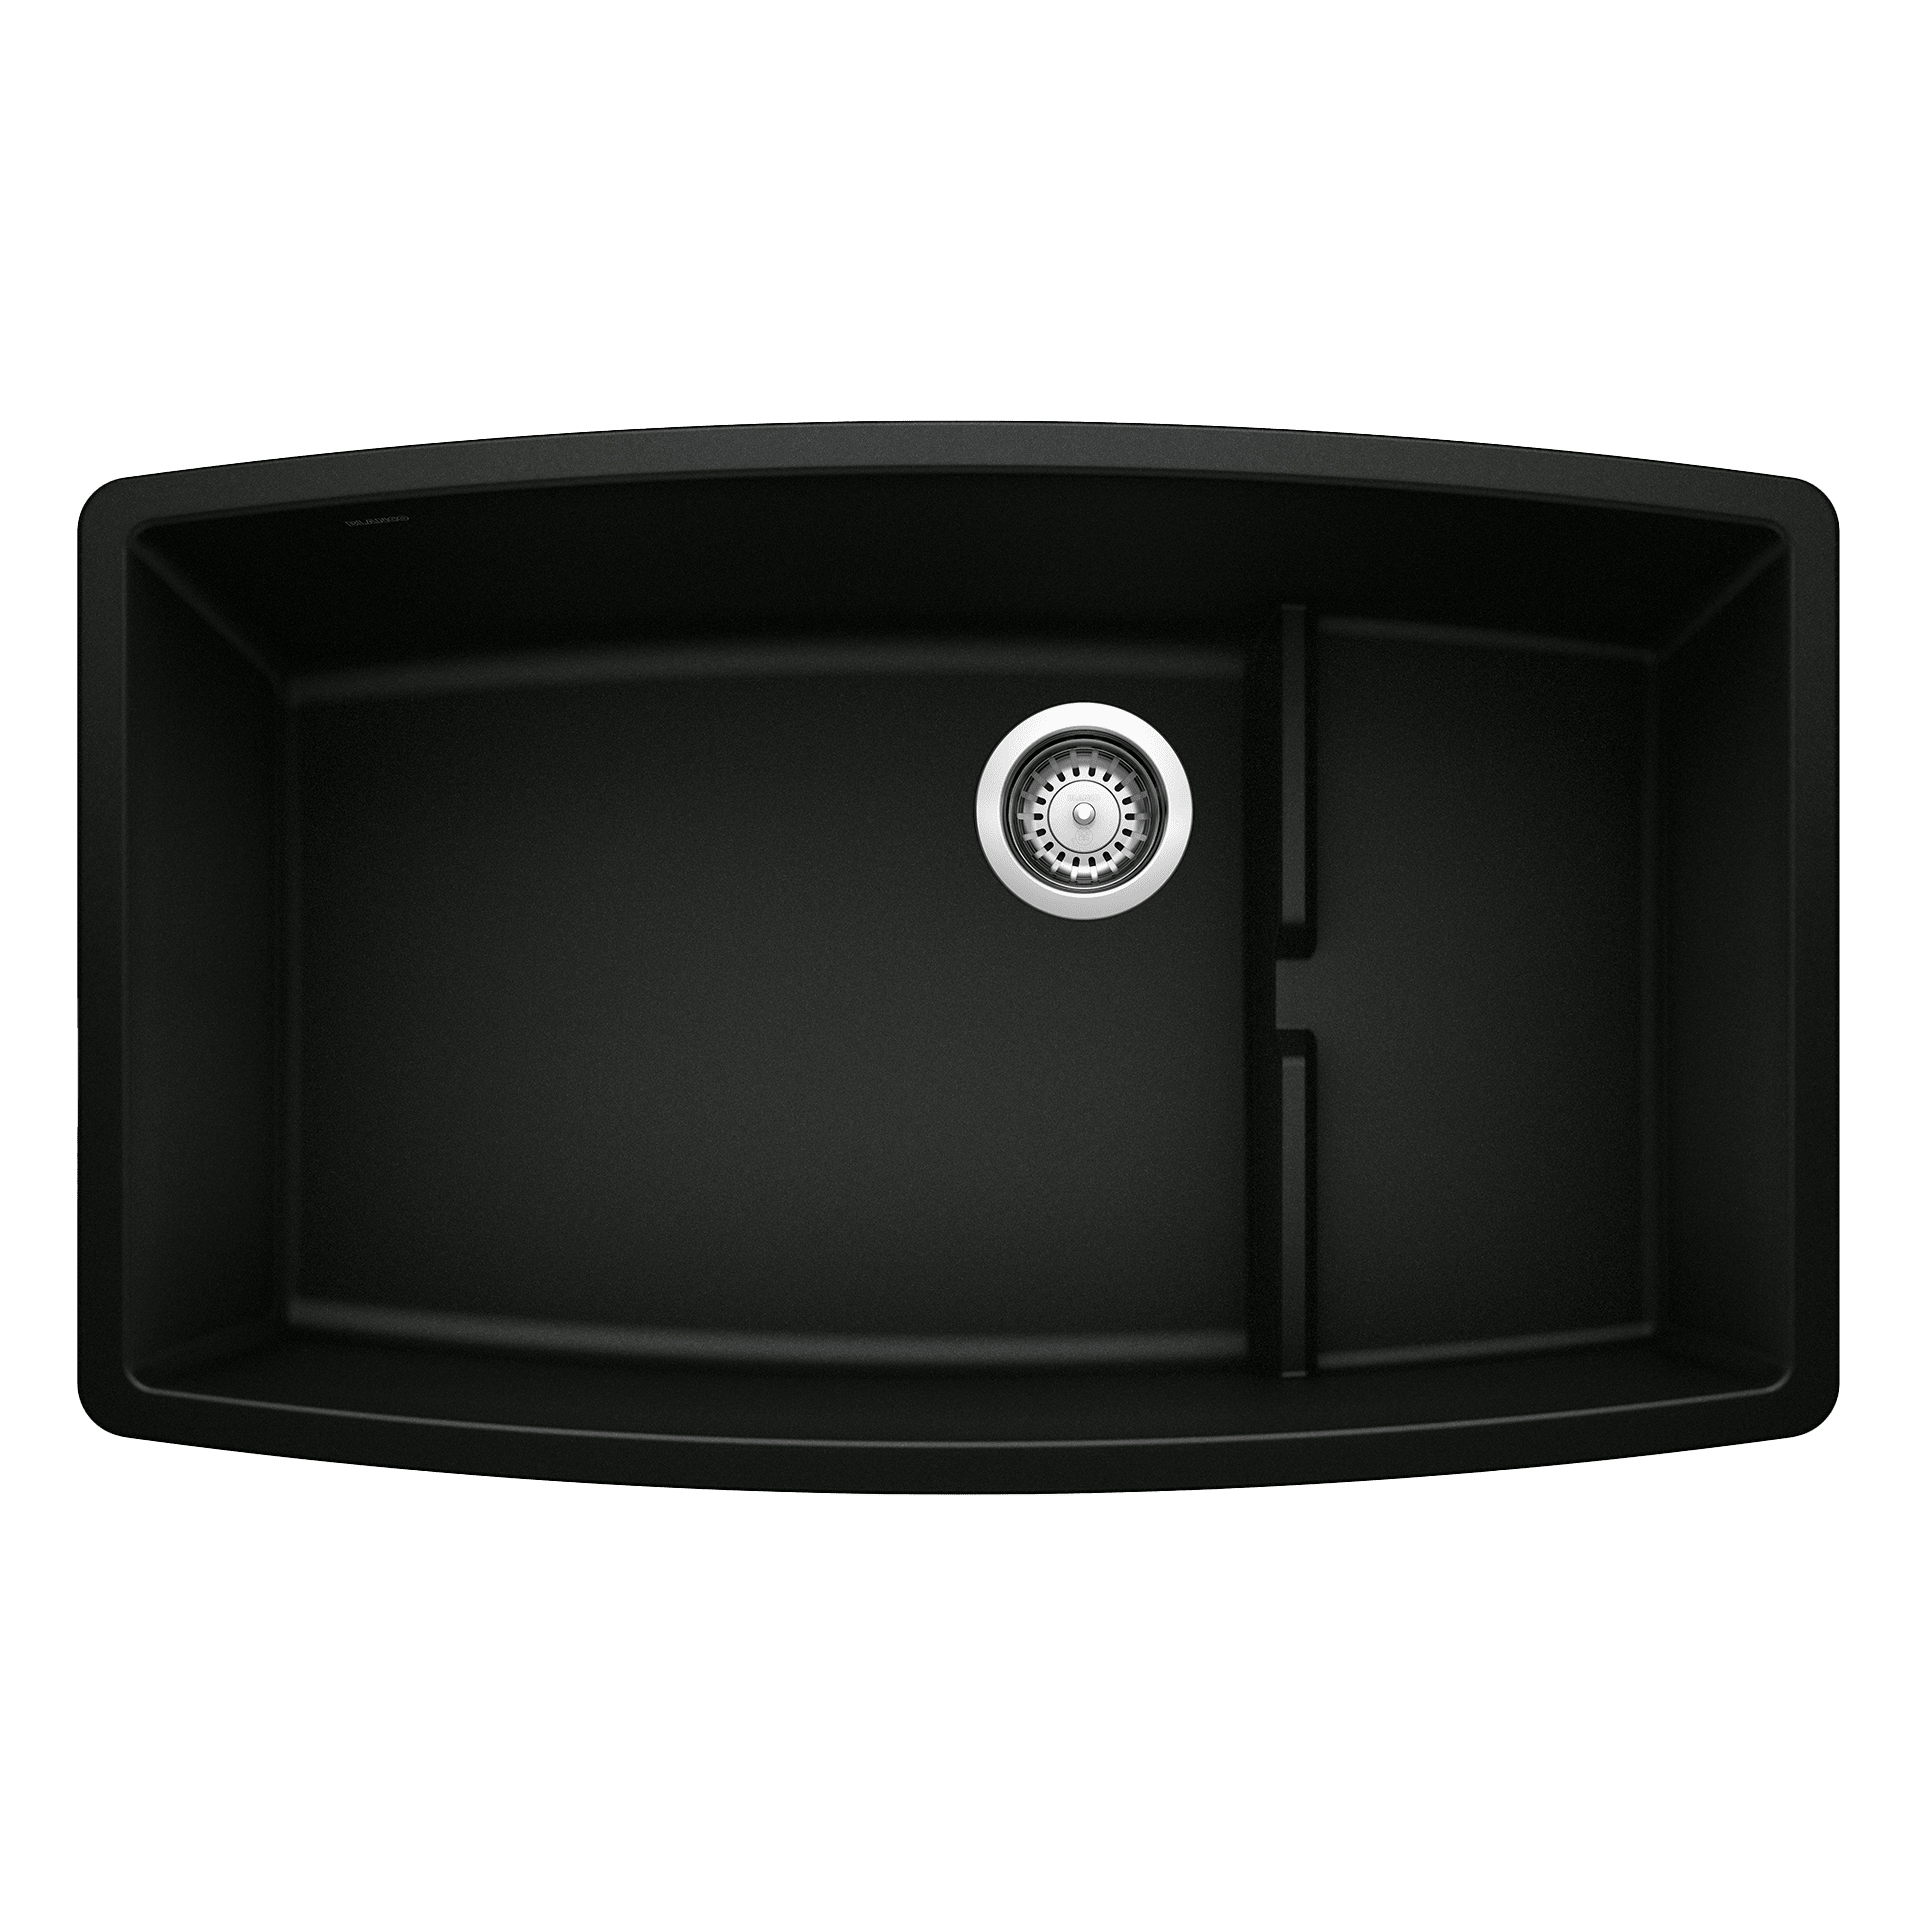 Performa Cascade 32x19-1/2x10" Super Single Sink in Black